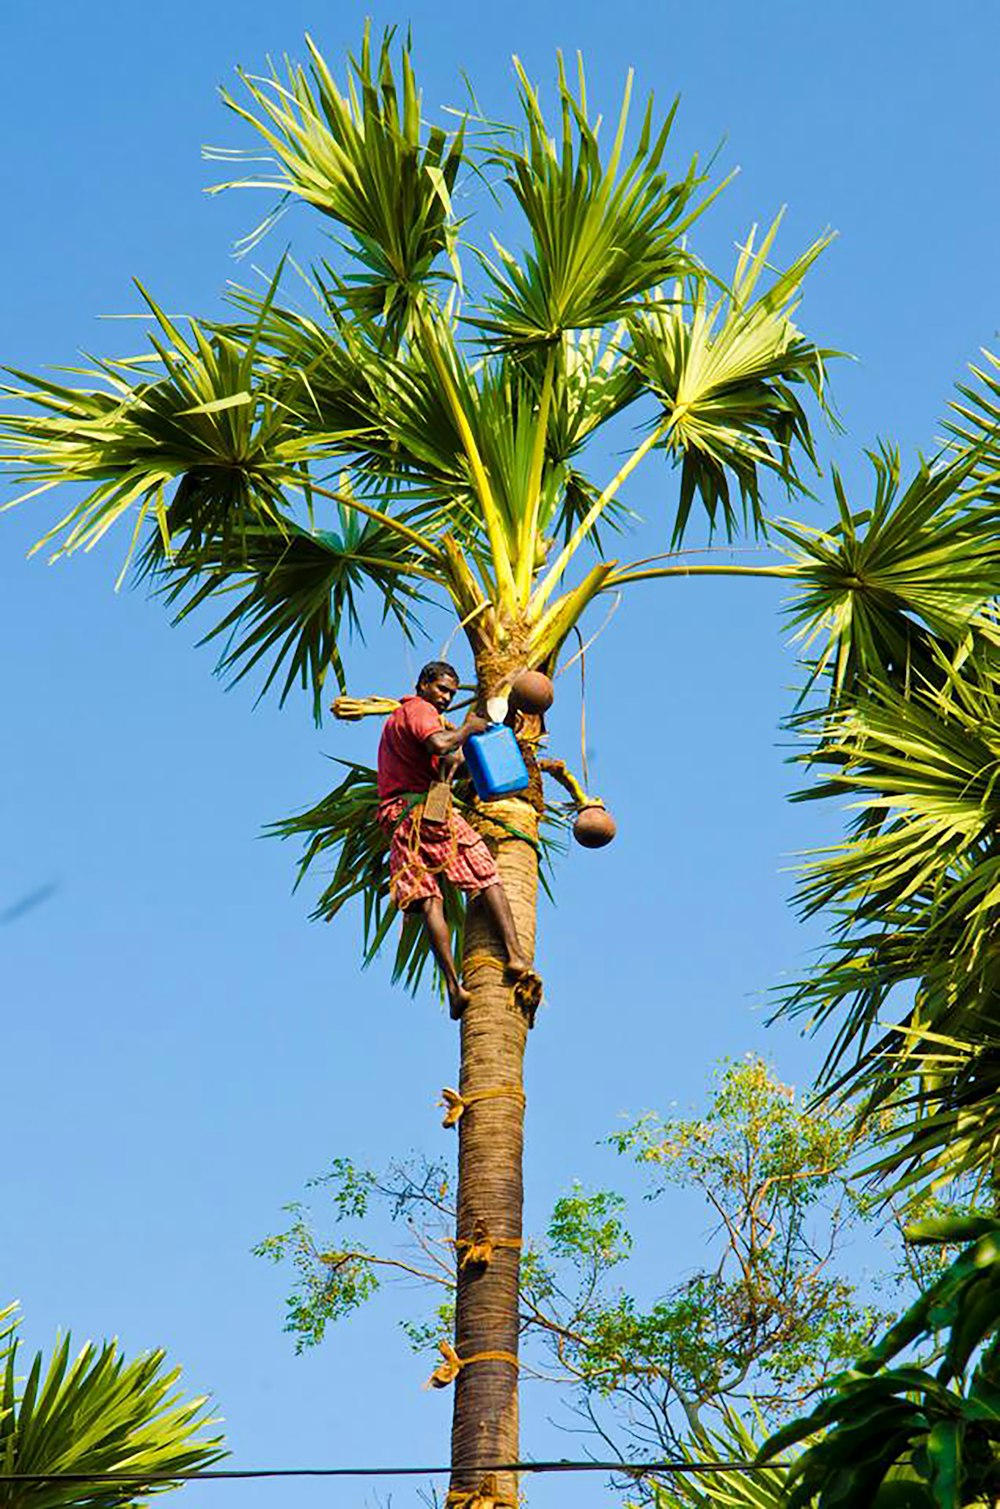 a man is climbing up a palm tree